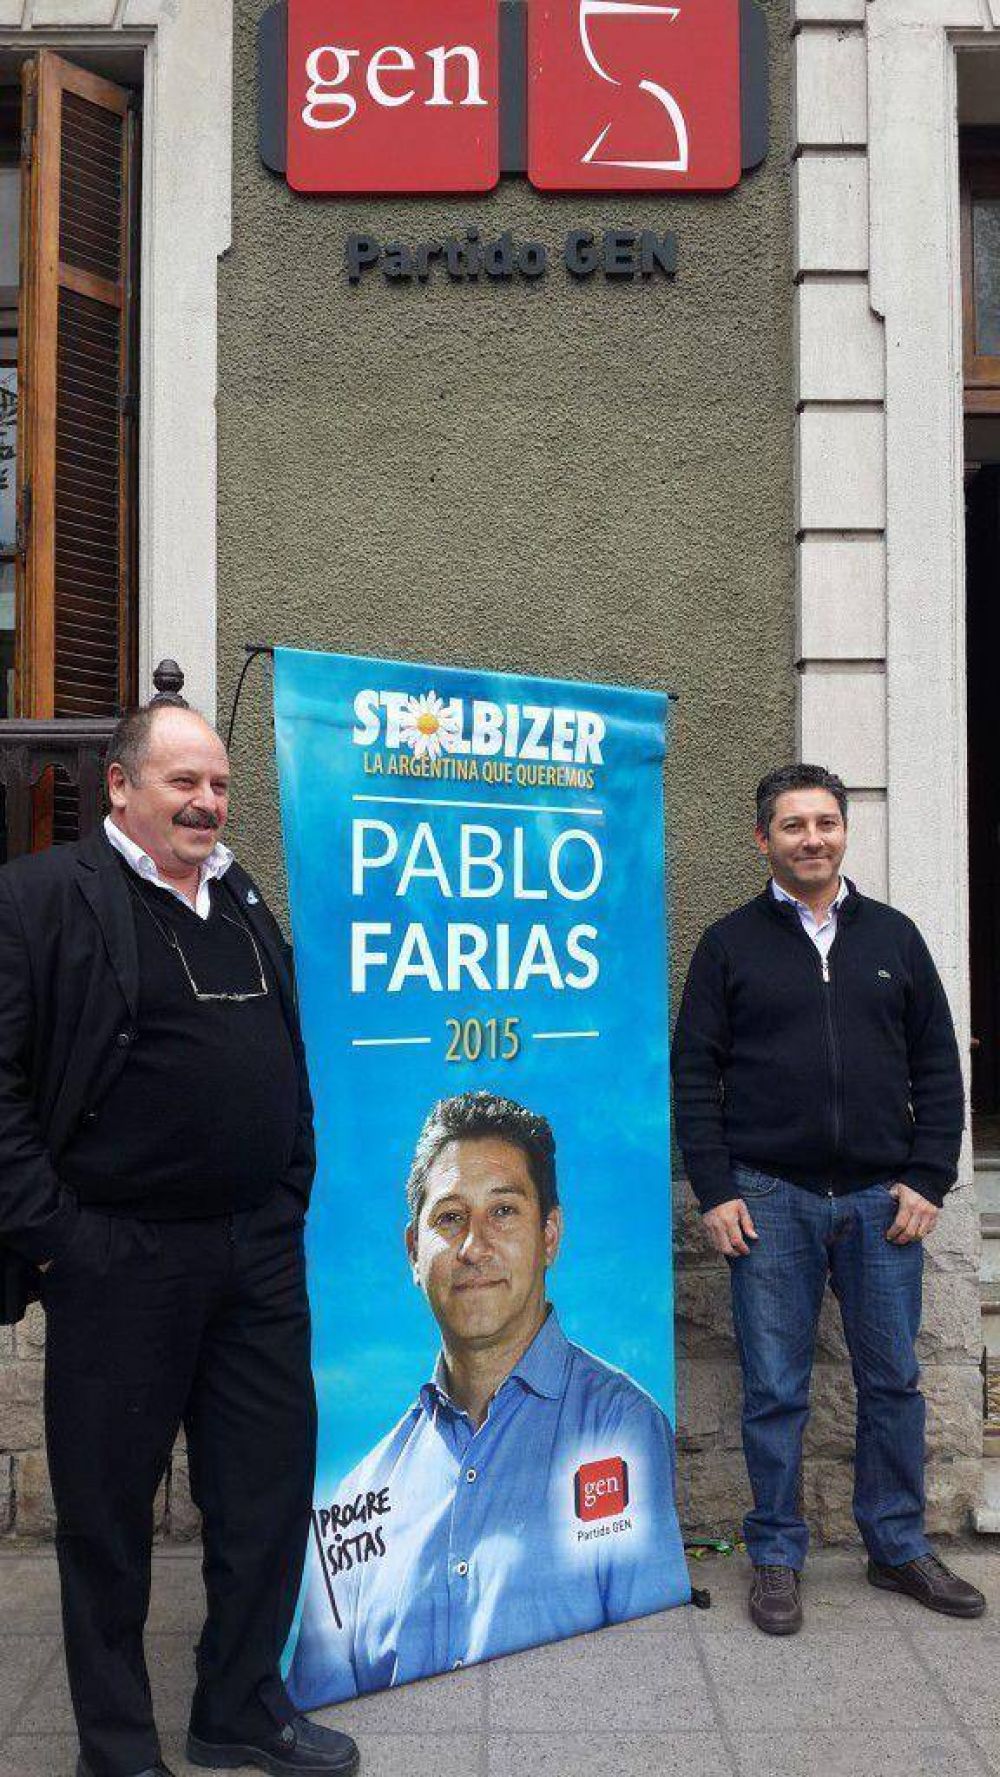 Lista nica: Pablo Aceto apoyar a Pablo Faras como precandidato a Intendente